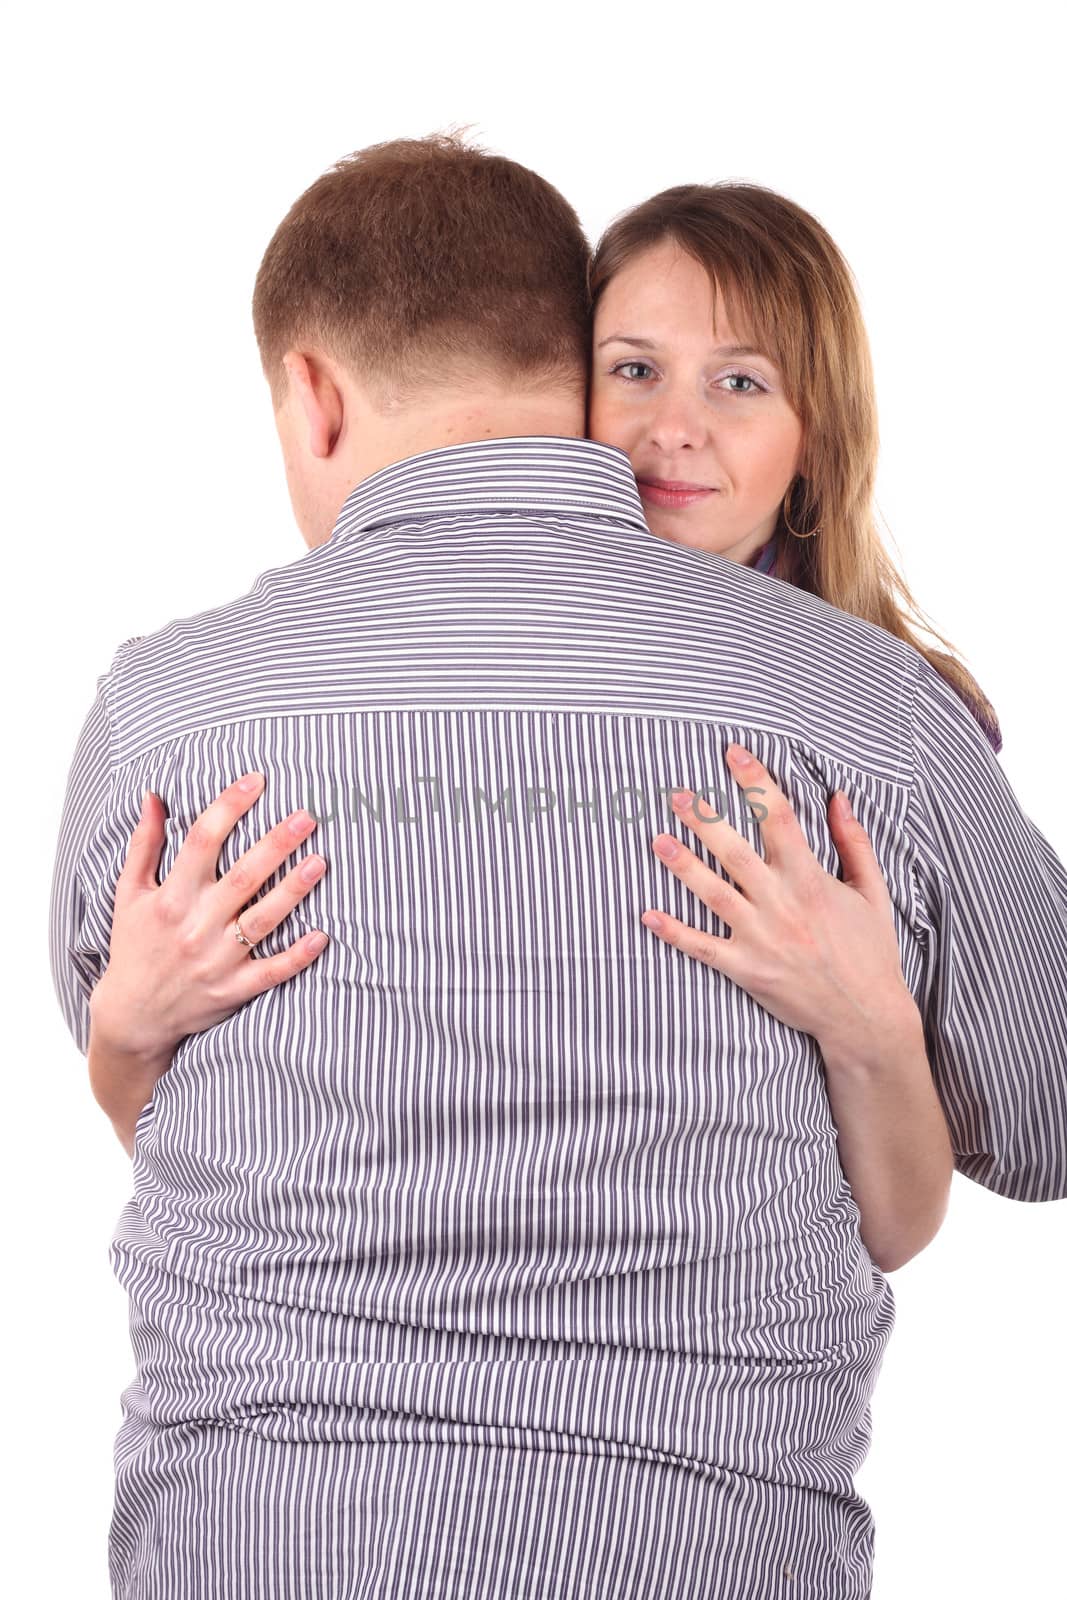 Girl embracing man by dedmorozz